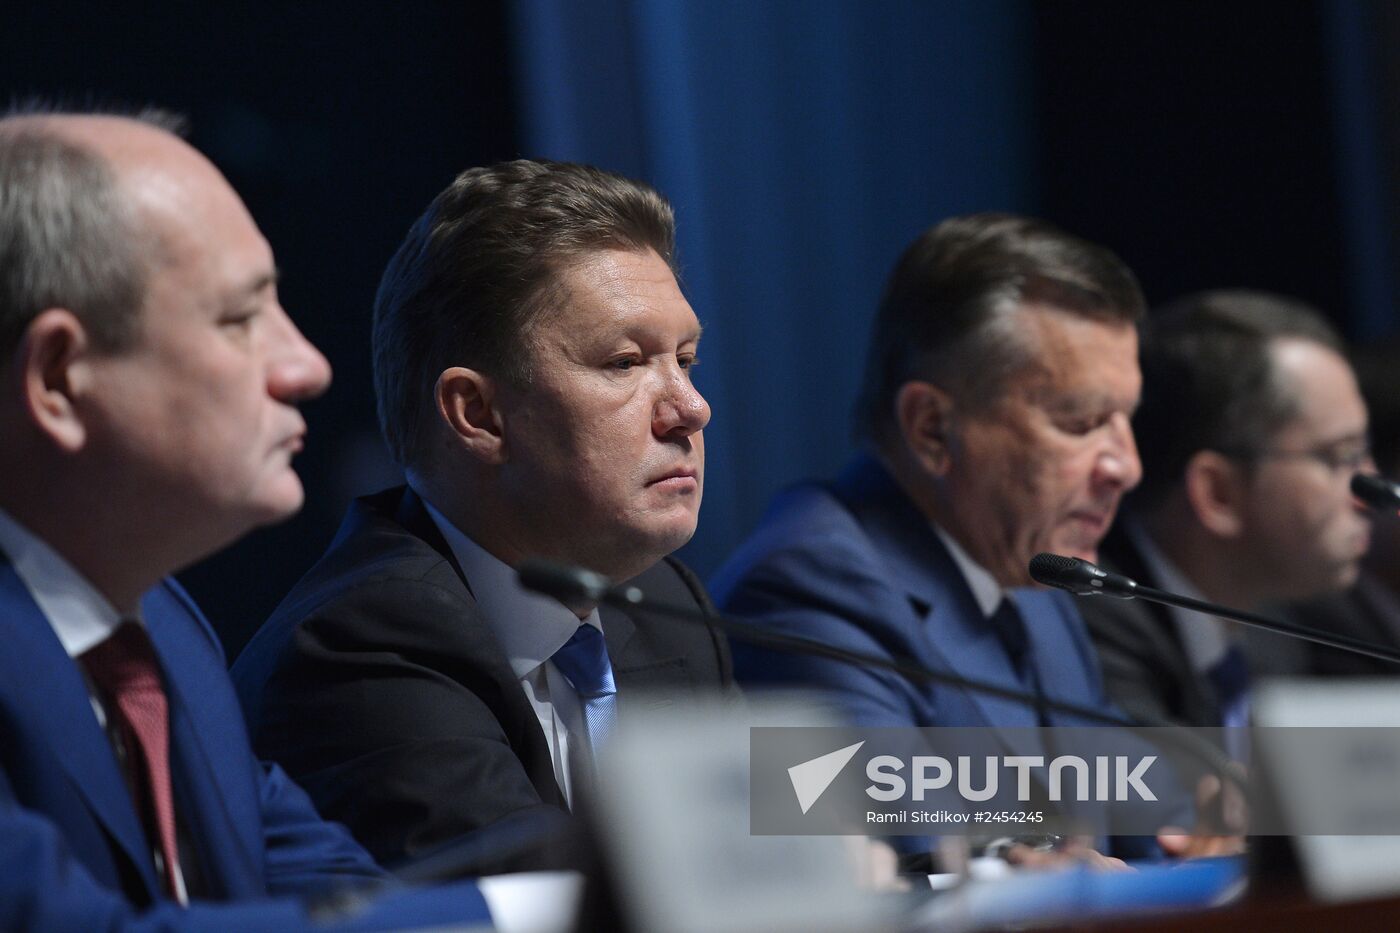 Gazprom's annual general meeting